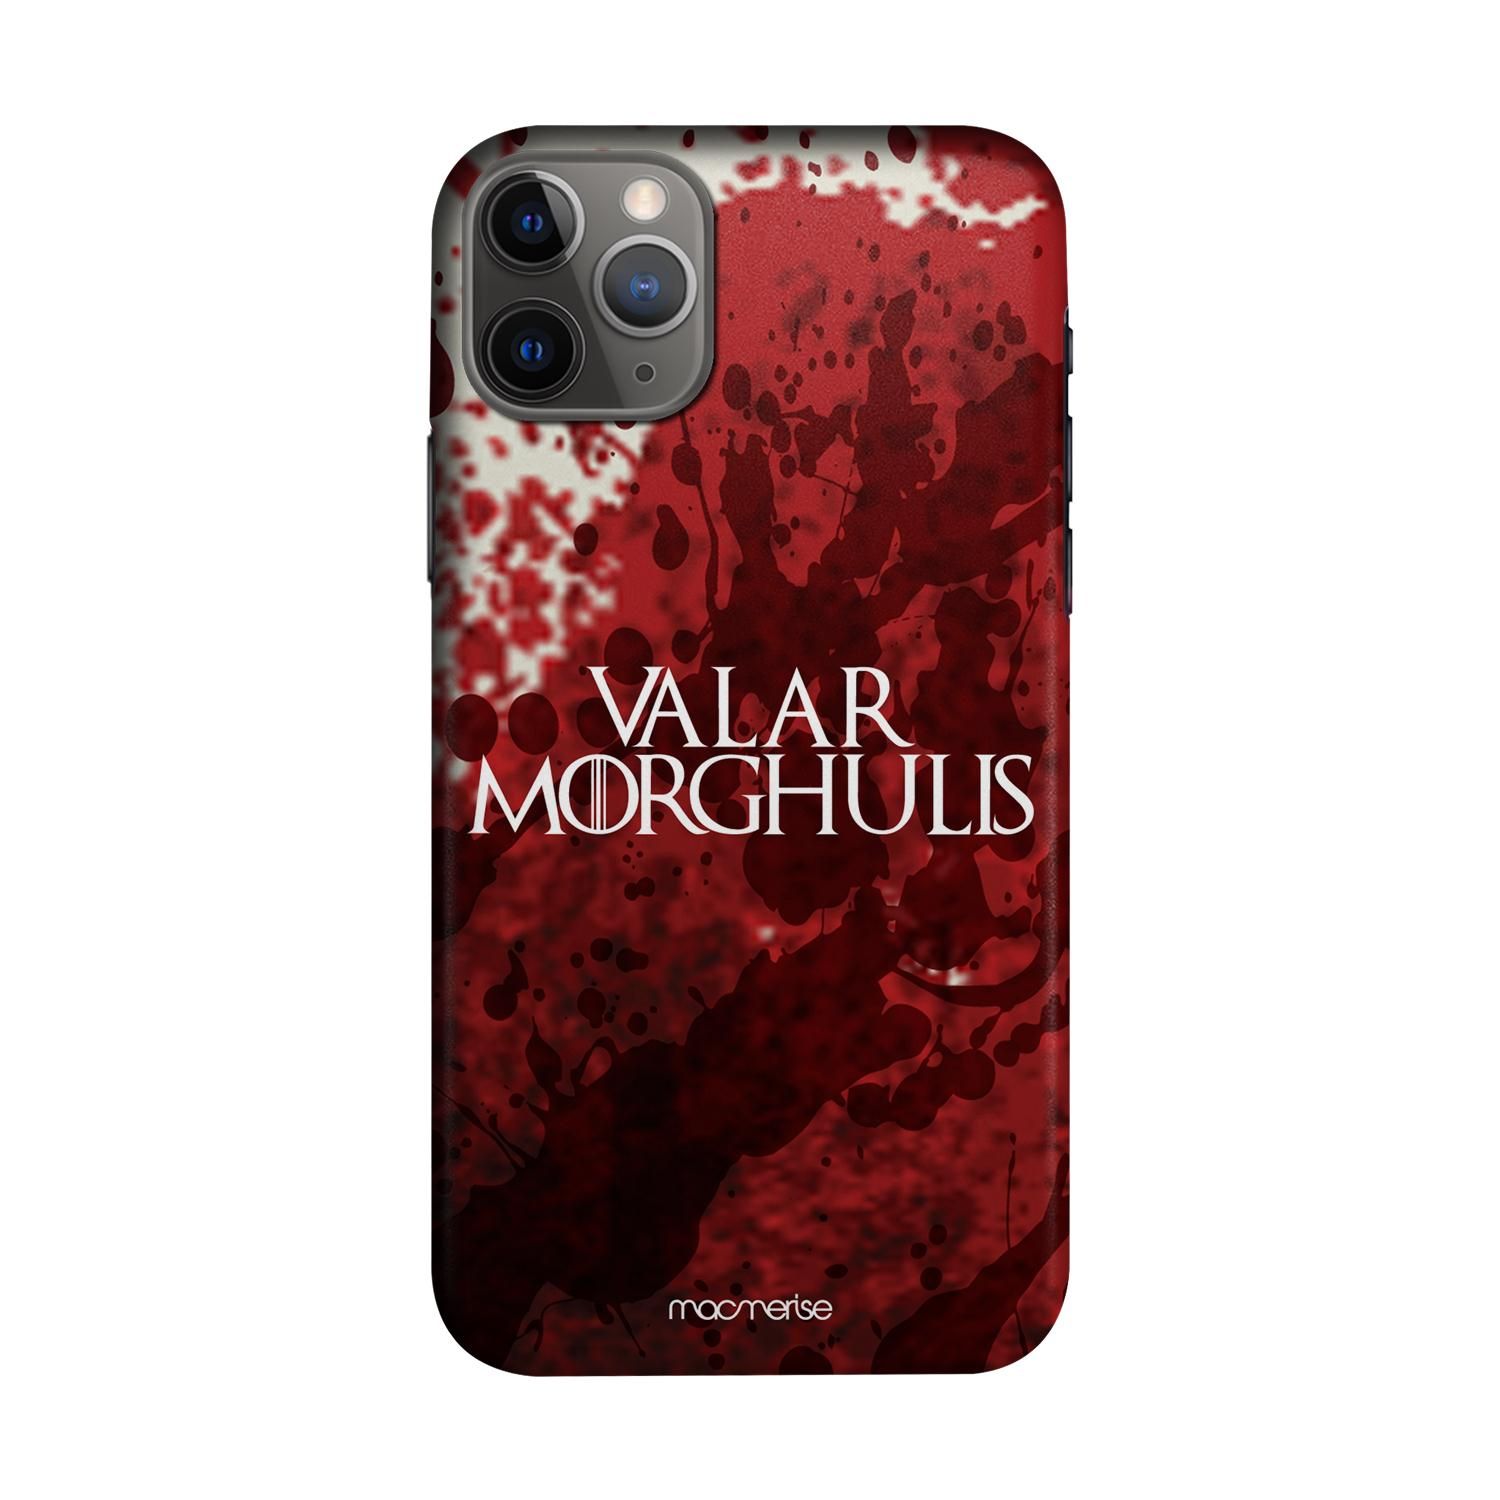 Buy Valar Morghulis - Sleek Phone Case for iPhone 11 Pro Max Online